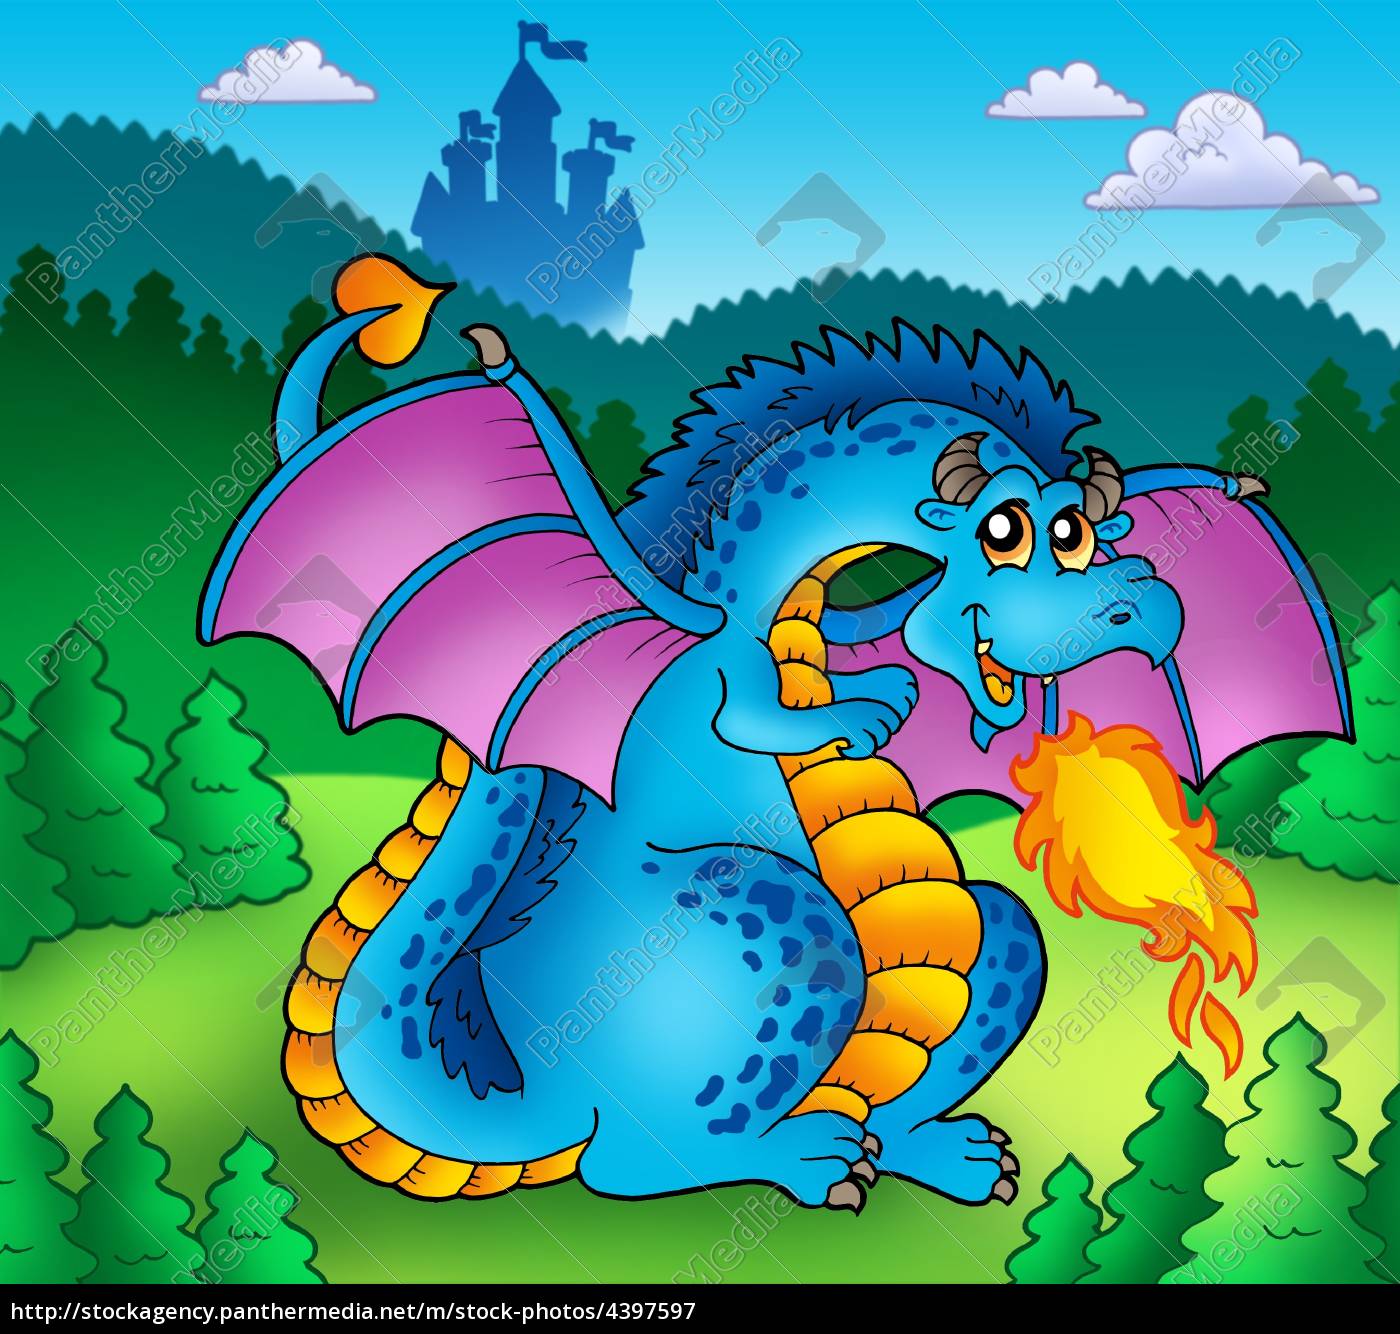 Illustration Fire Dragon Drache